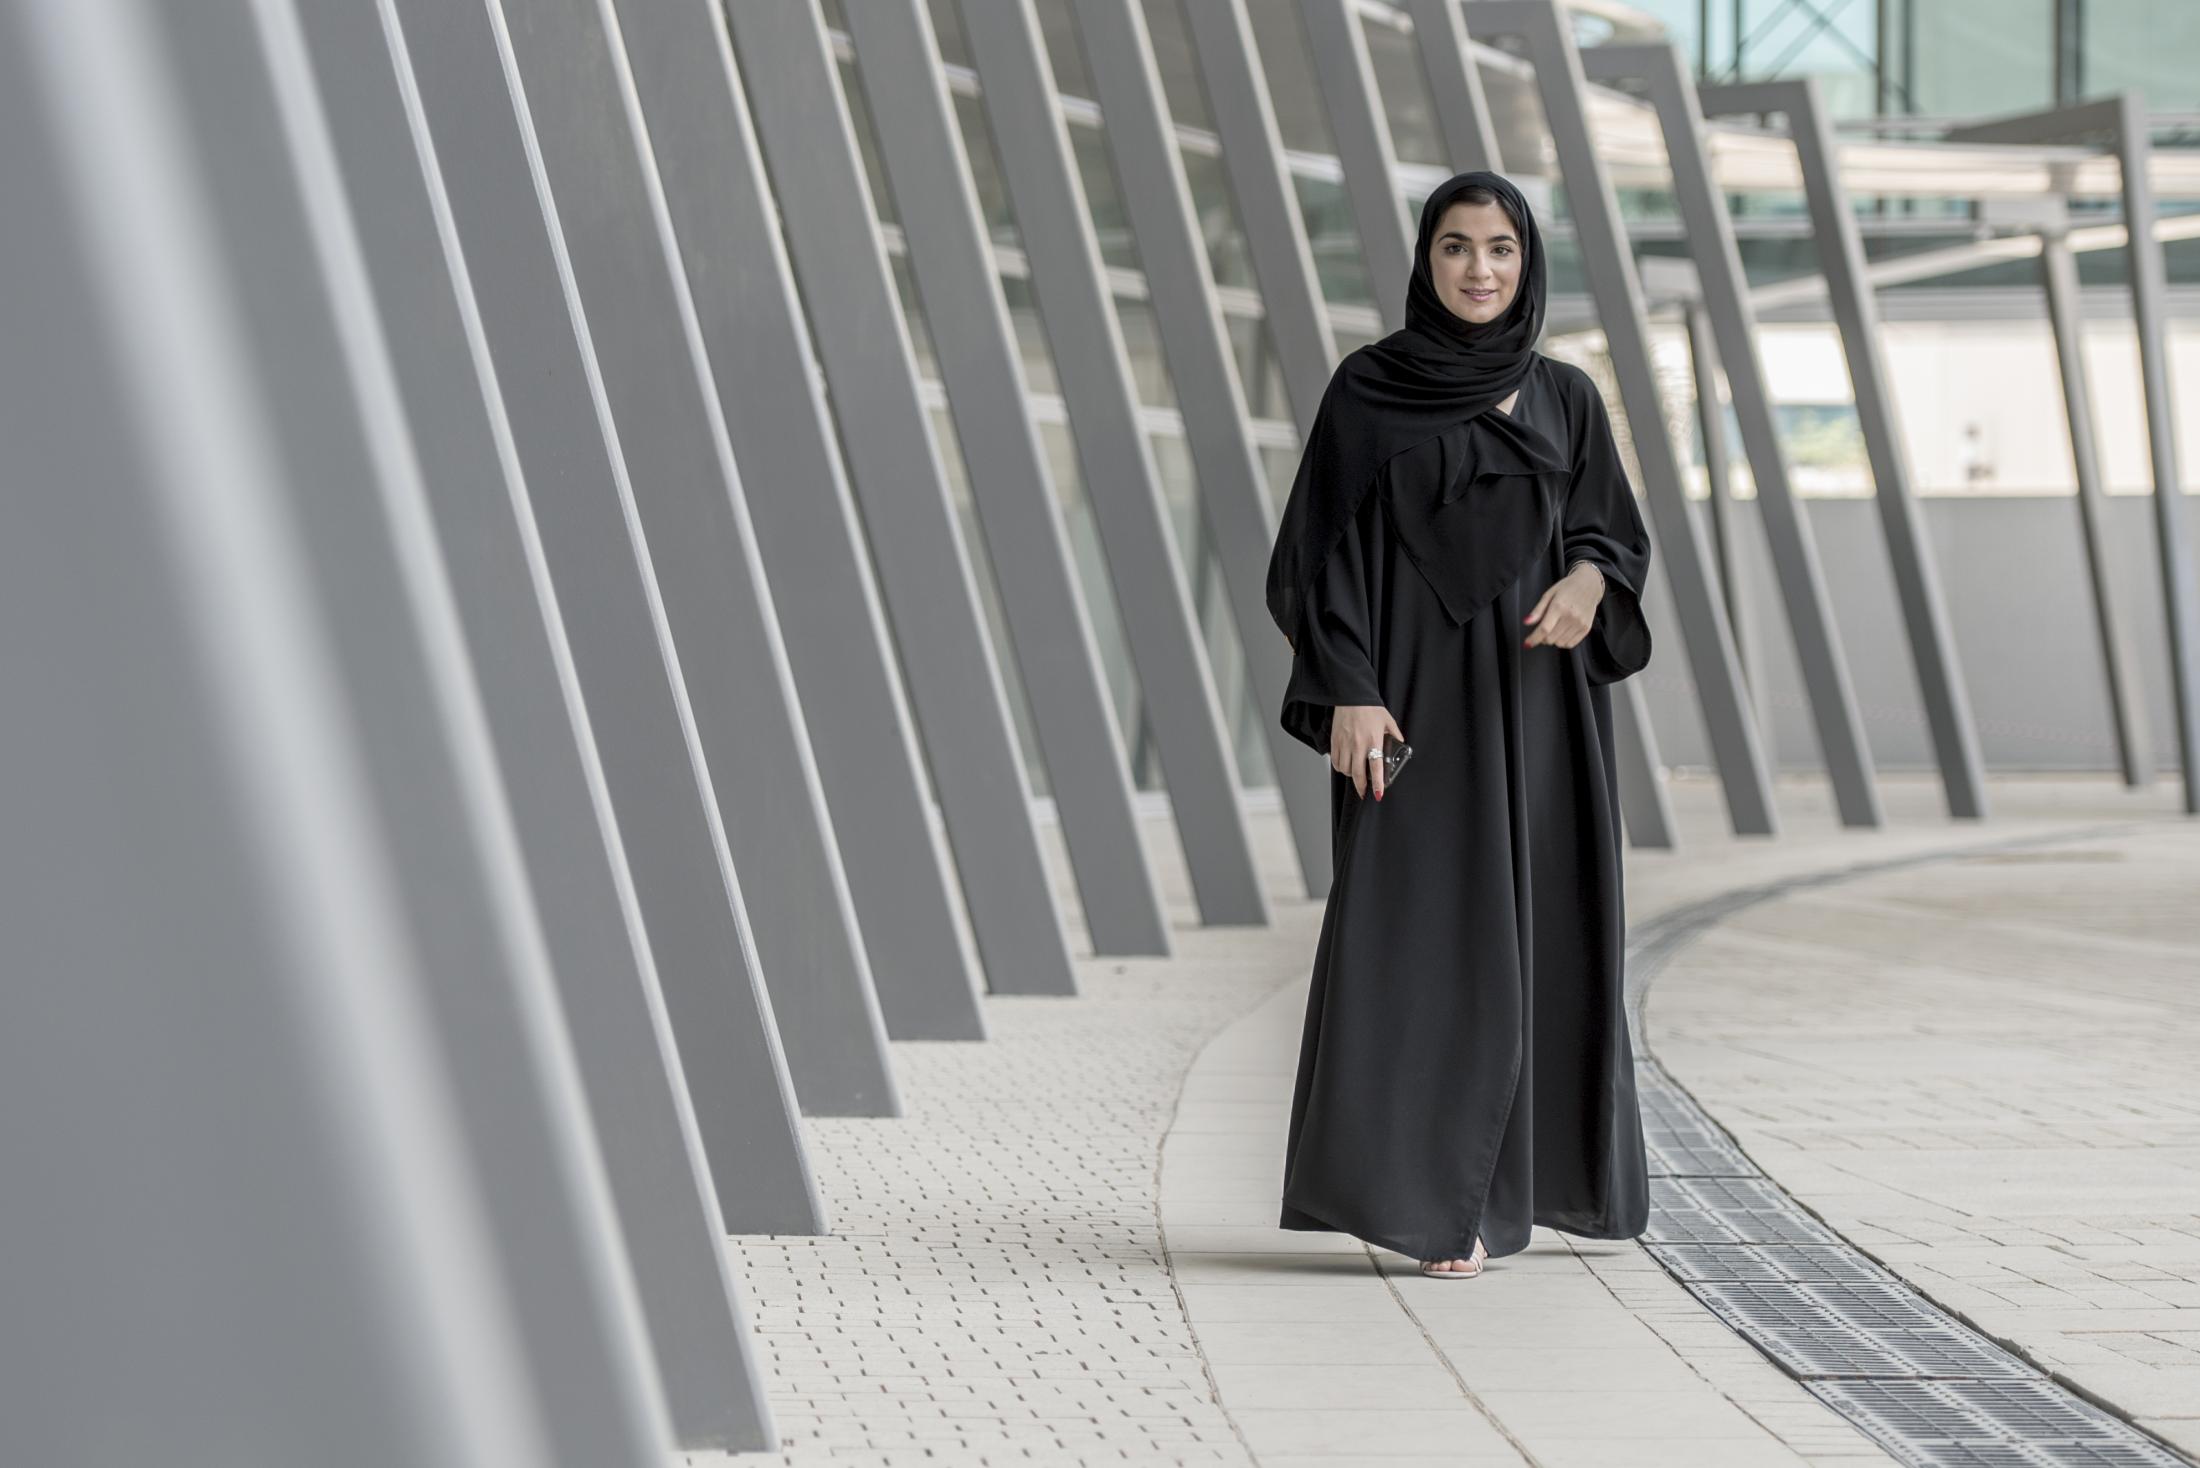 Portraits - Noor Baghar Al Mazrooqi student of Zayed University, Abu...